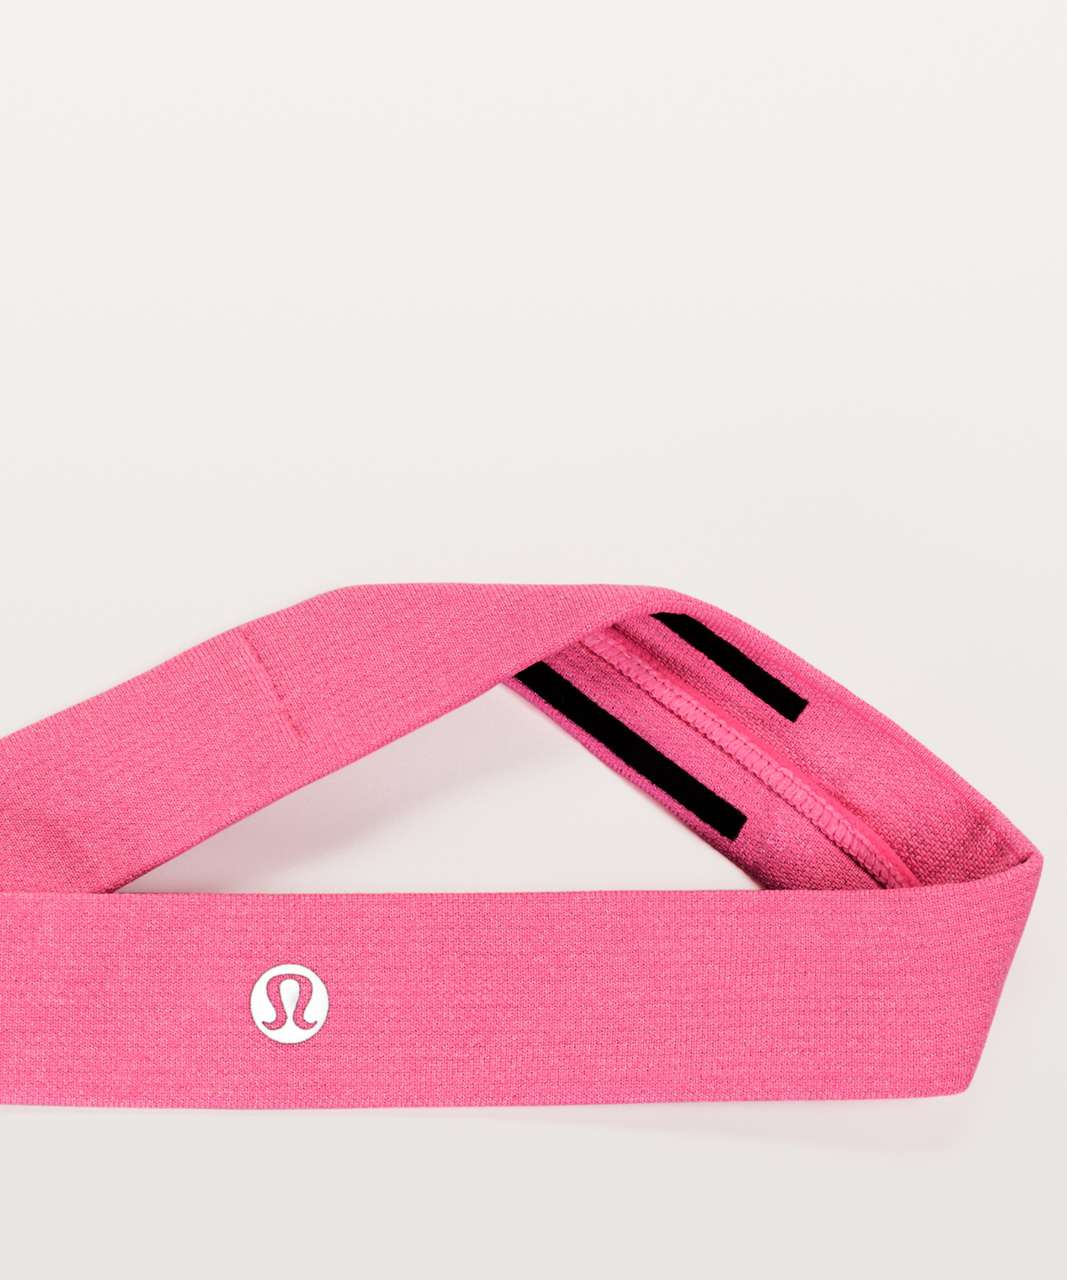 Lululemon Cardio Cross Trainer Headband - Neon Pink / White